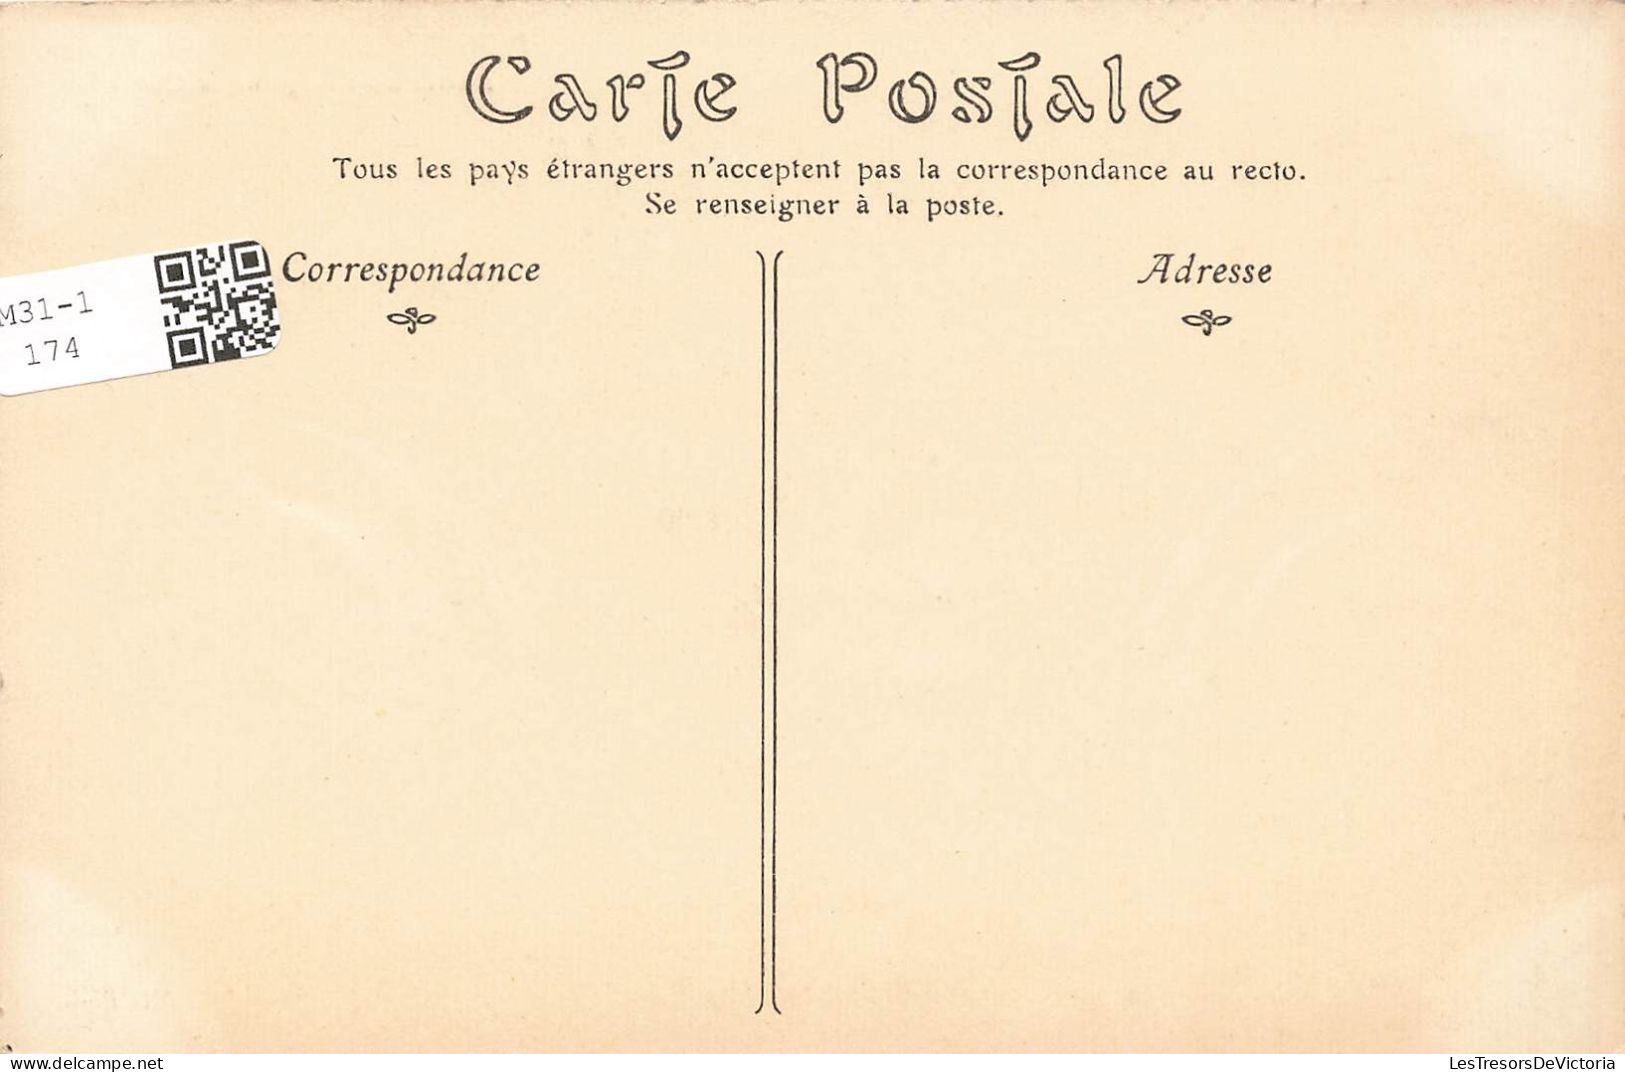 FRANCE - Perros Guirec - Entrée Du Village De La Clarté - Carte Postale Ancienne - Perros-Guirec